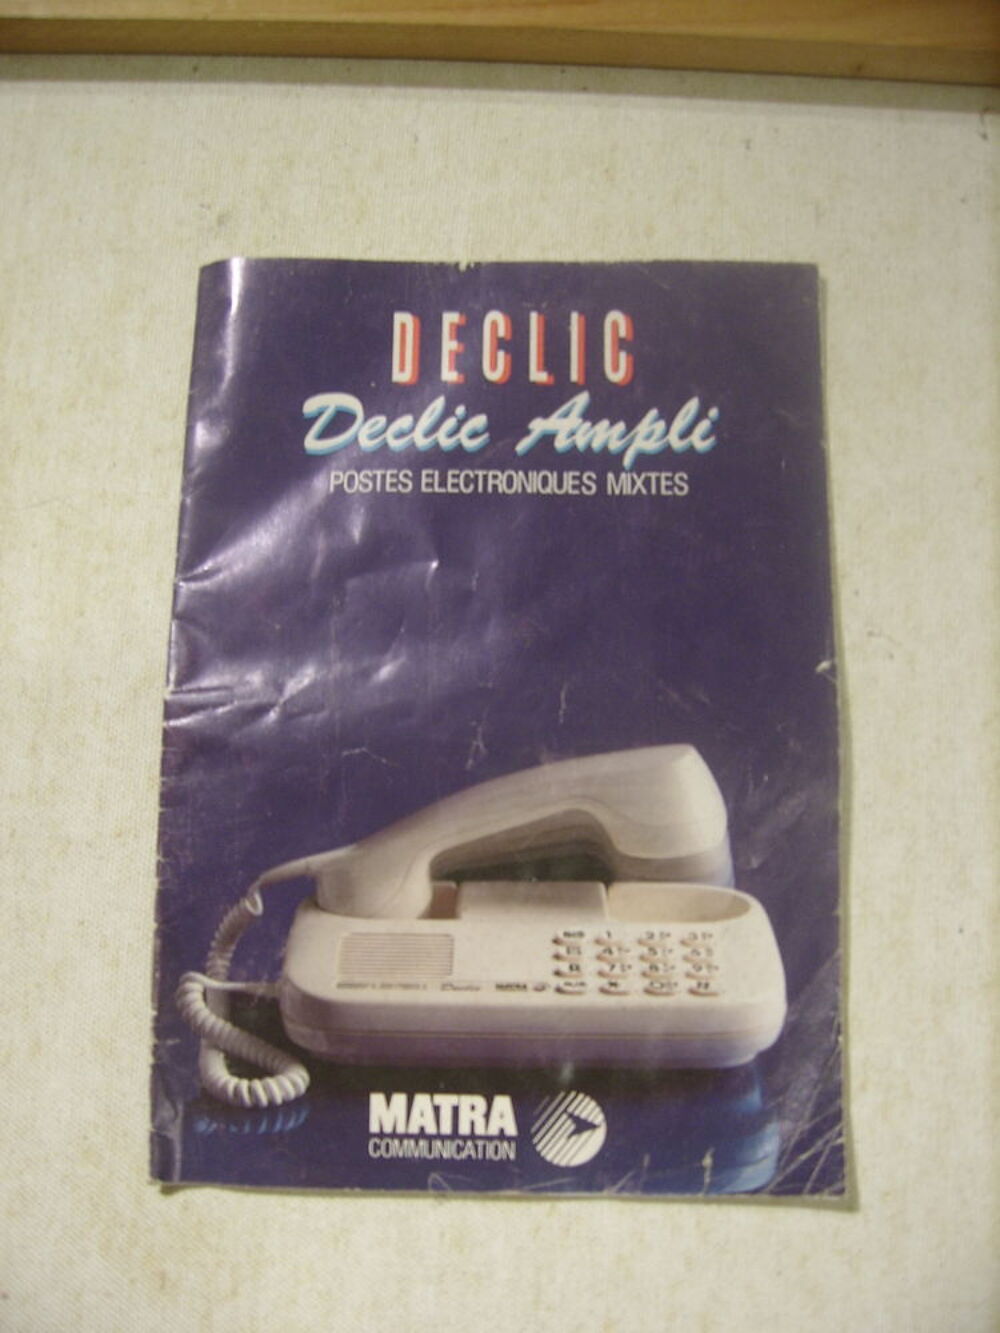 telephone DECLIC ampli MATRA
Dcoration